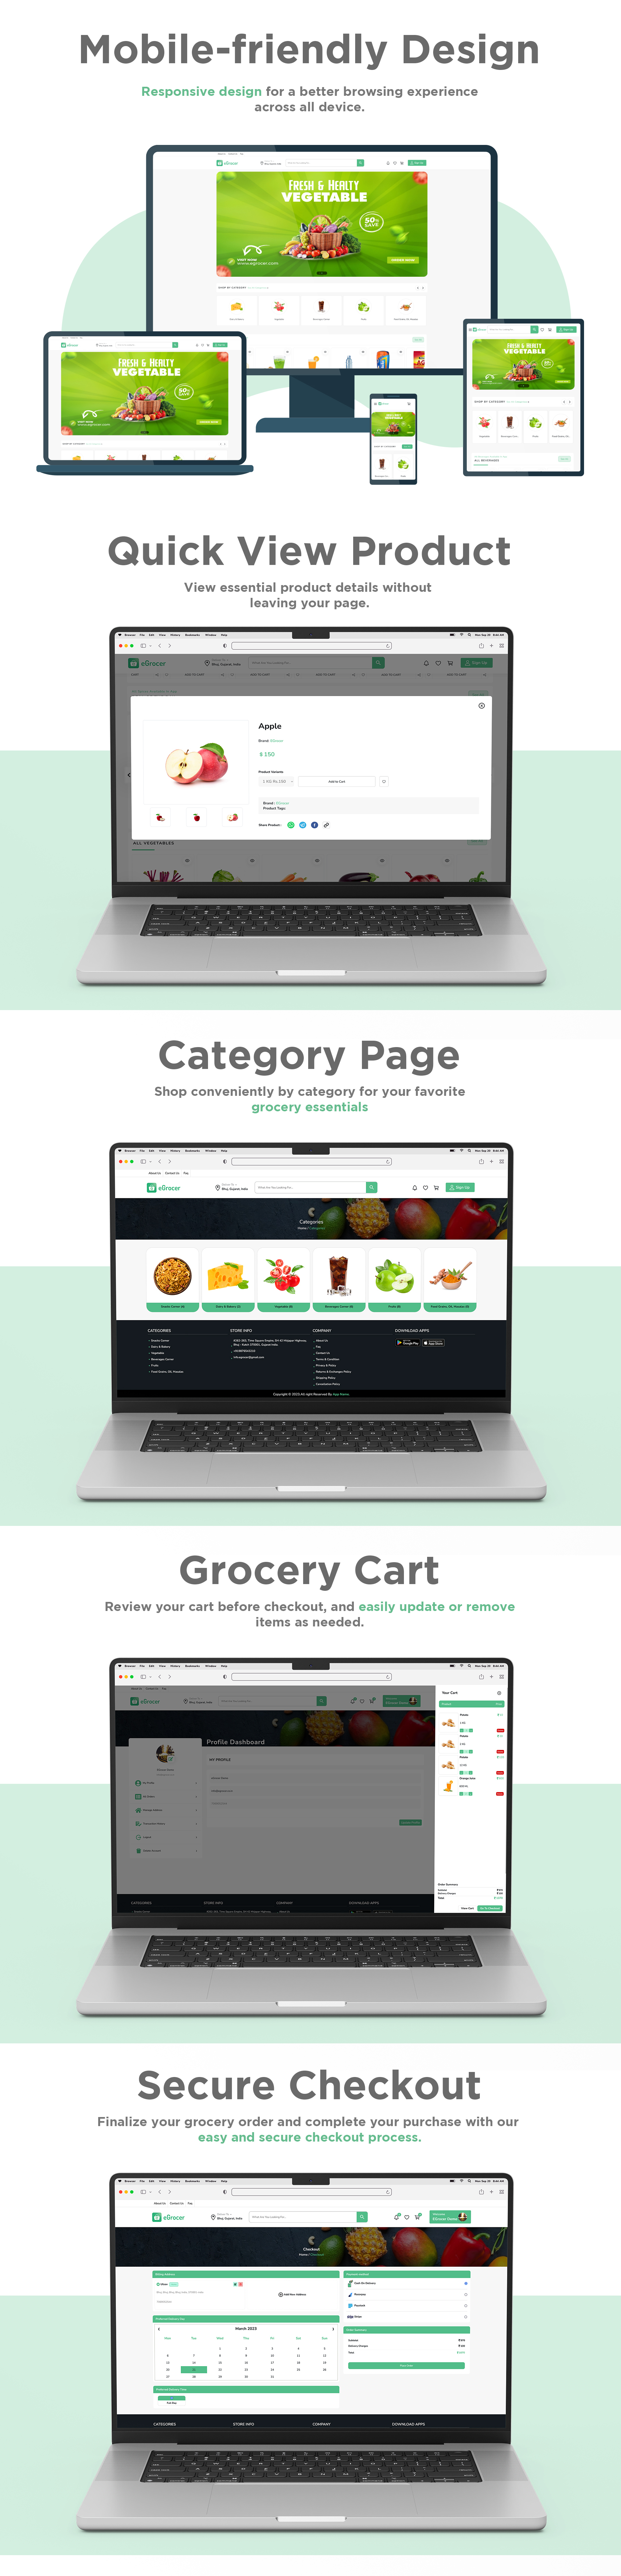 eGrocer - Online Multi Vendor Grocery Store, eCommerce Marketplace Flutter Full App with Admin Panel - 20